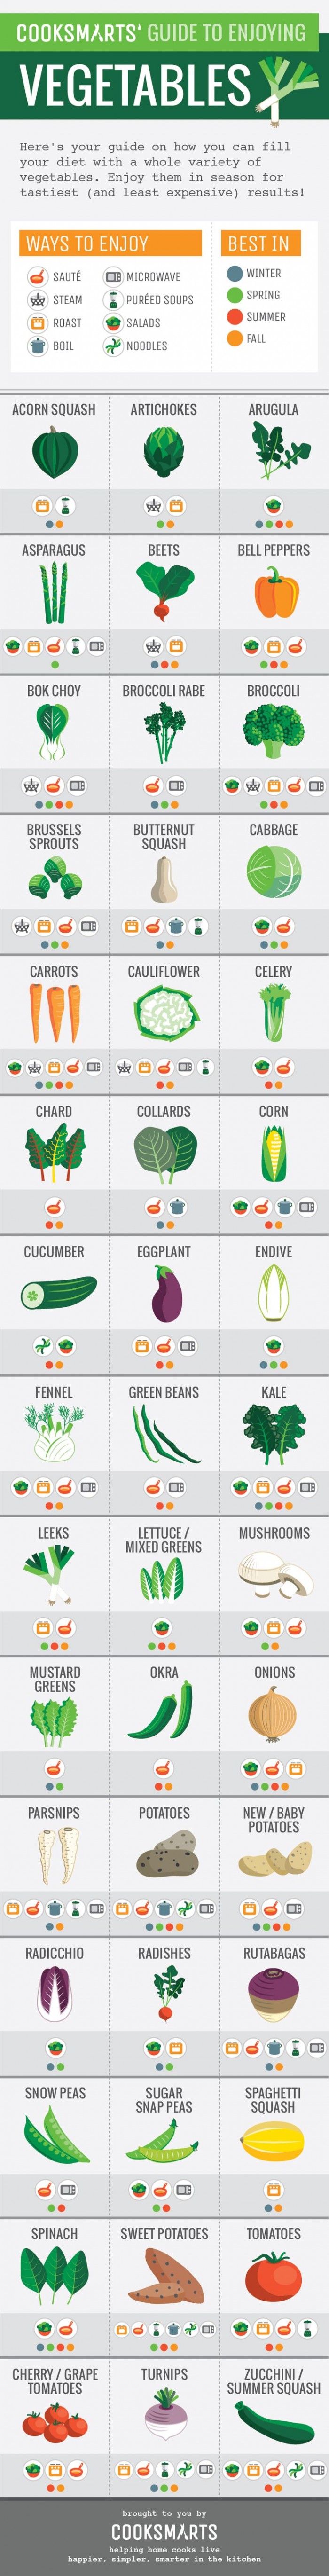 vegetable guide